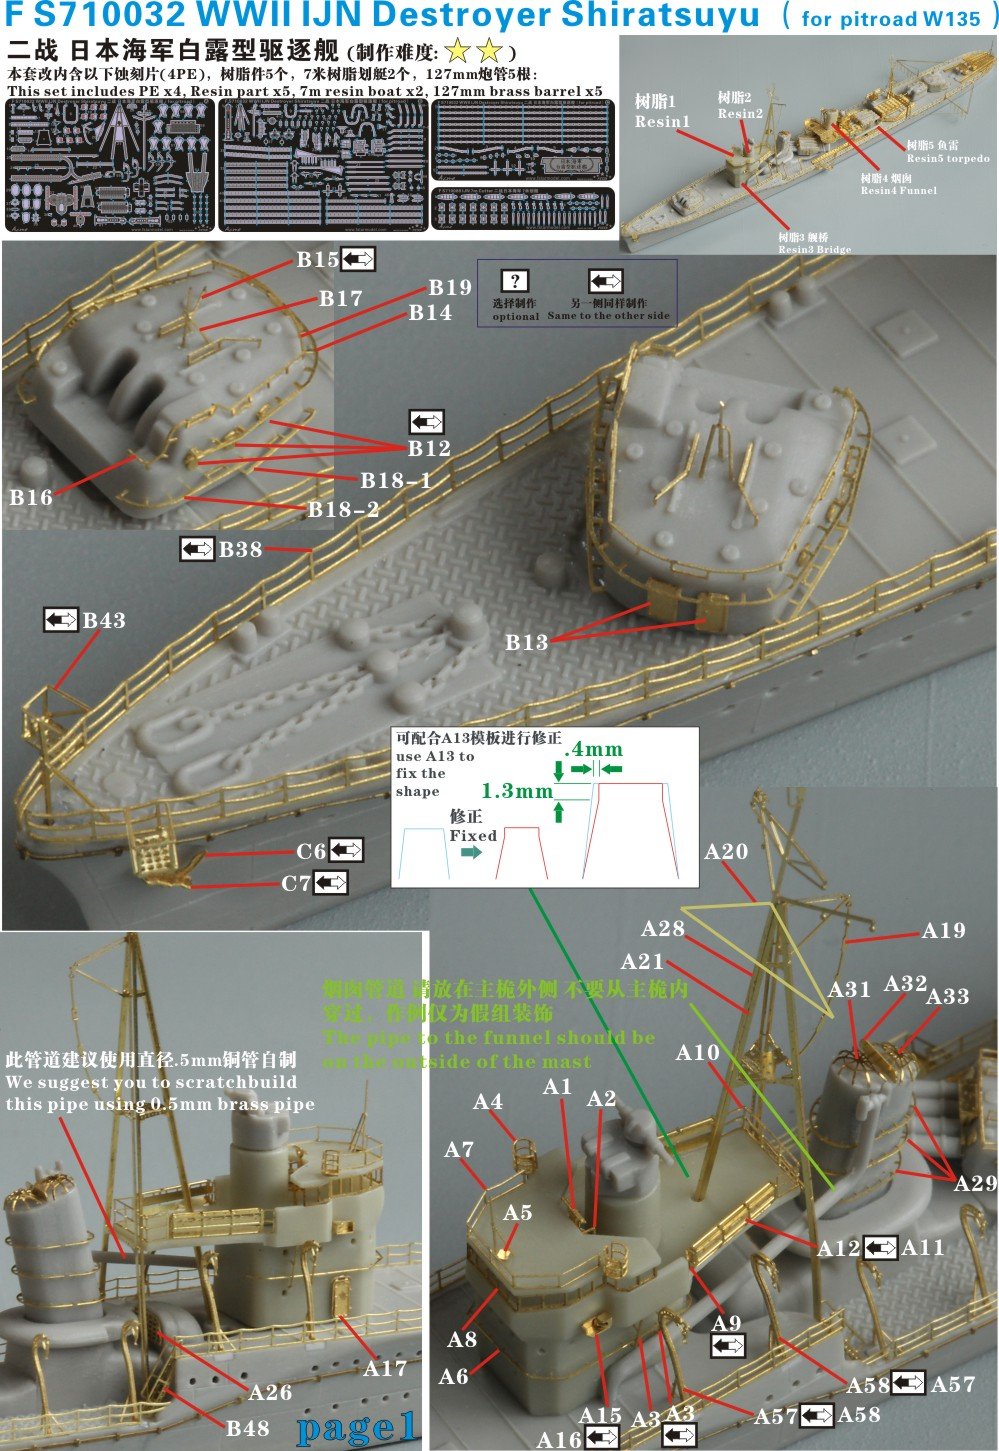 1/700 IJN Destroyer Shiratsuyu Upgrade Set for Pitroad W135 - Click Image to Close